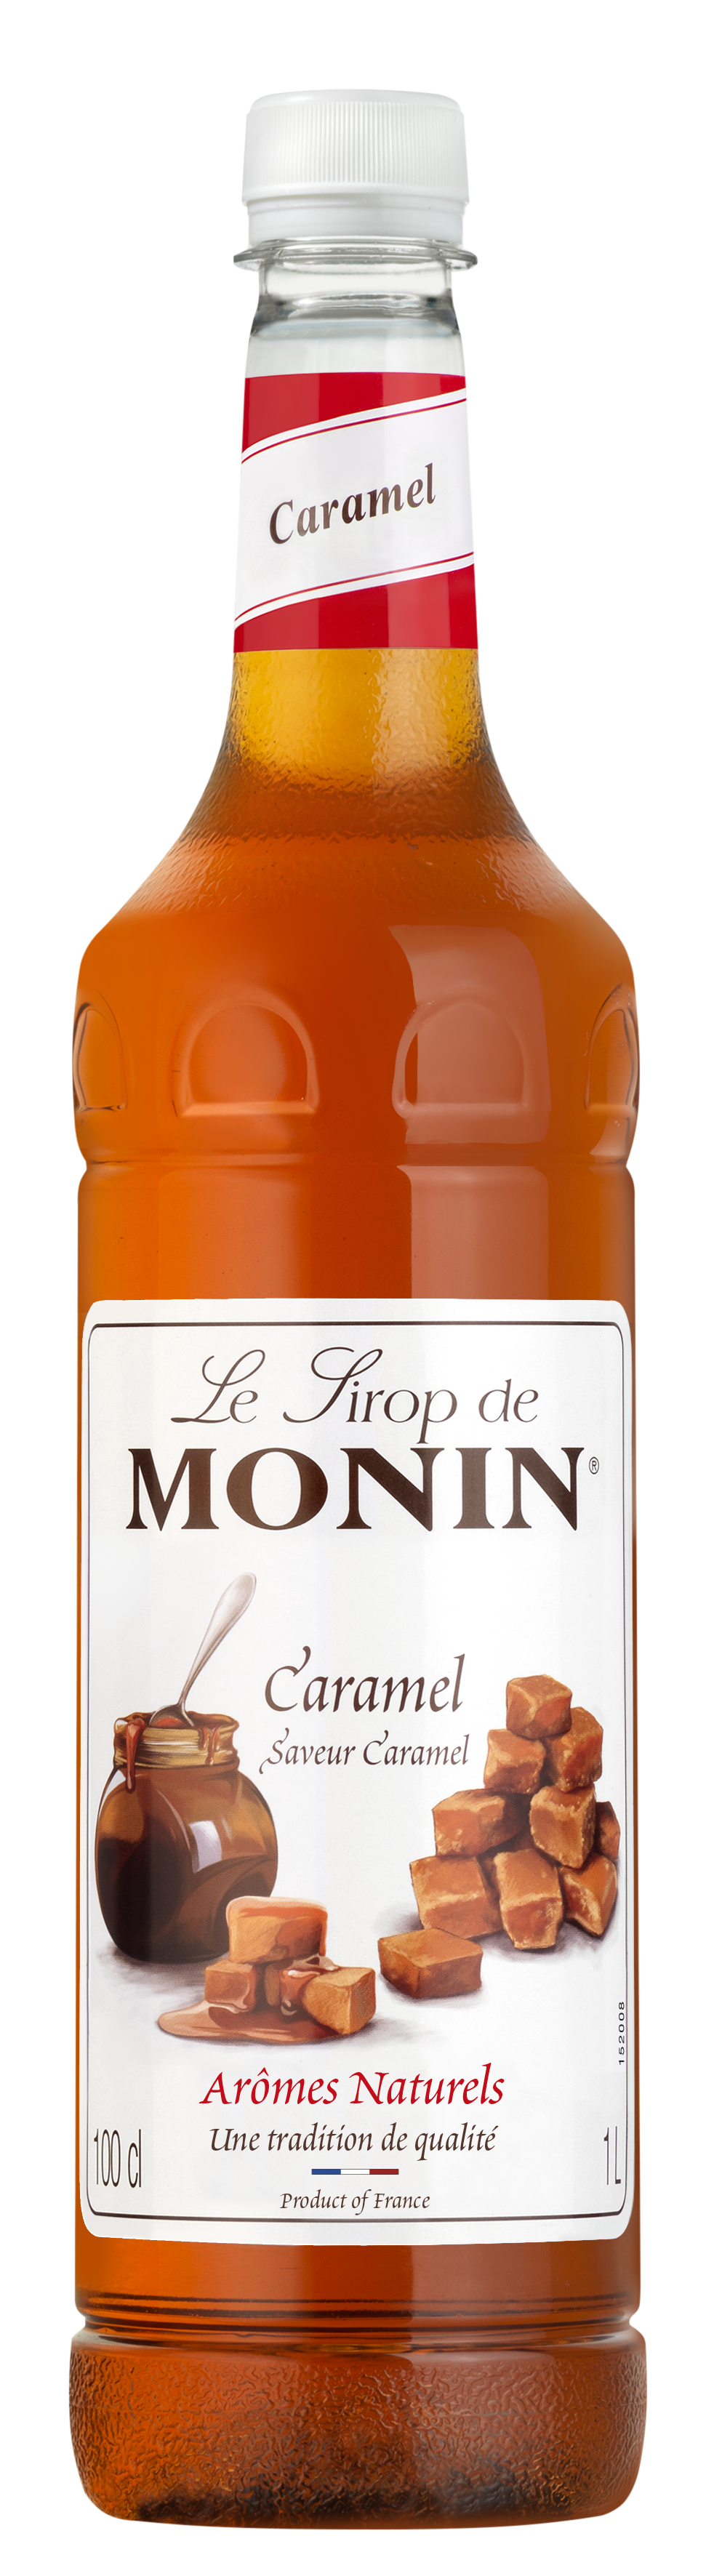 MONIN Caramel Syrup 1L